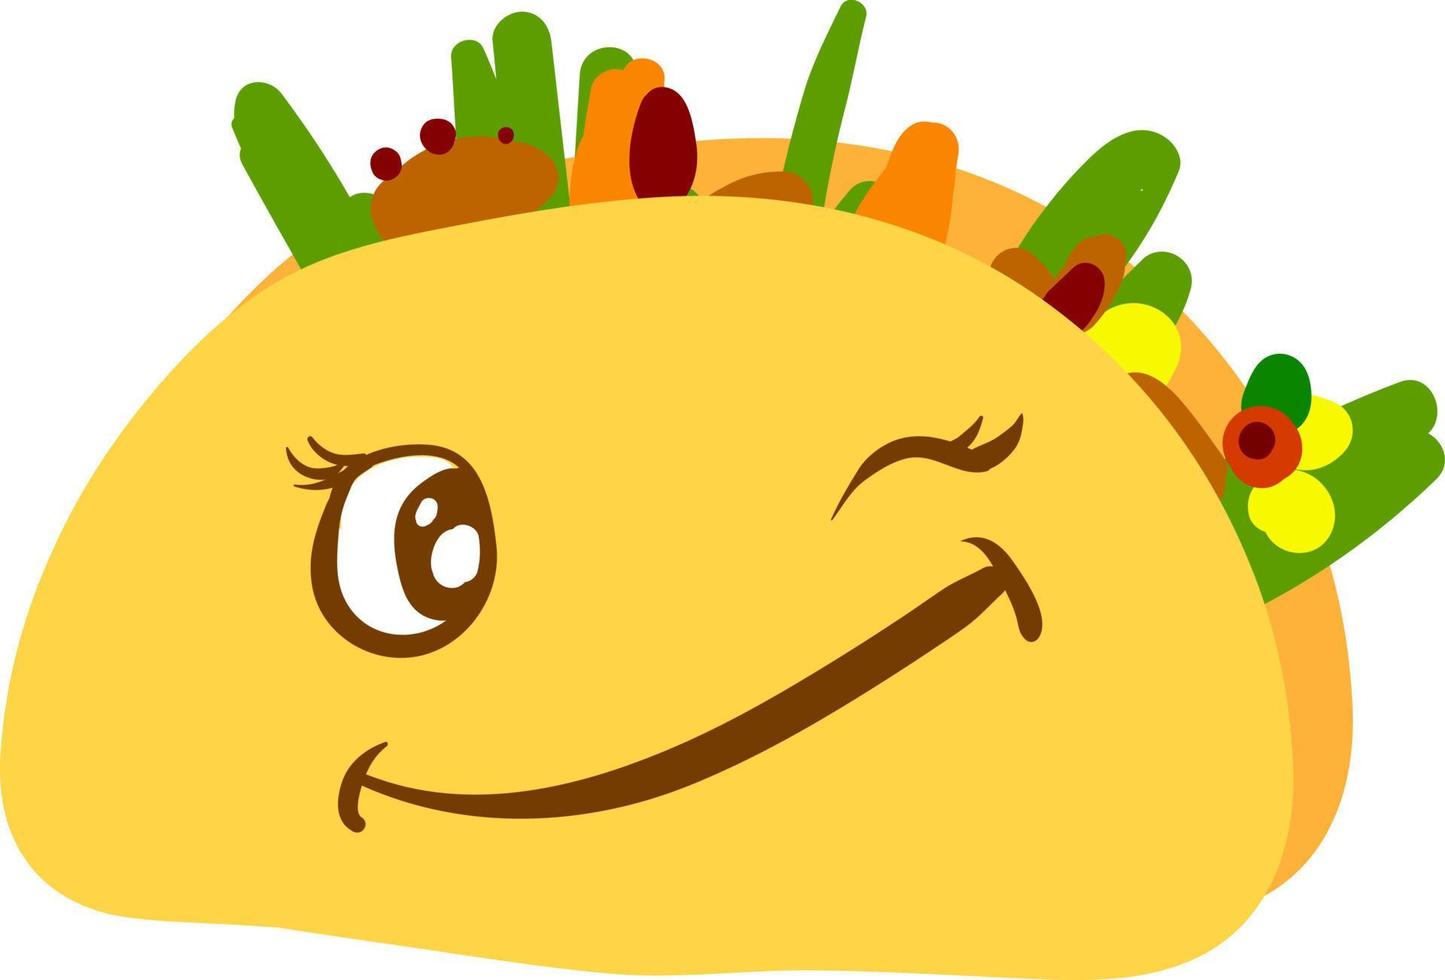 Winking taco, illustration, vector on white background.